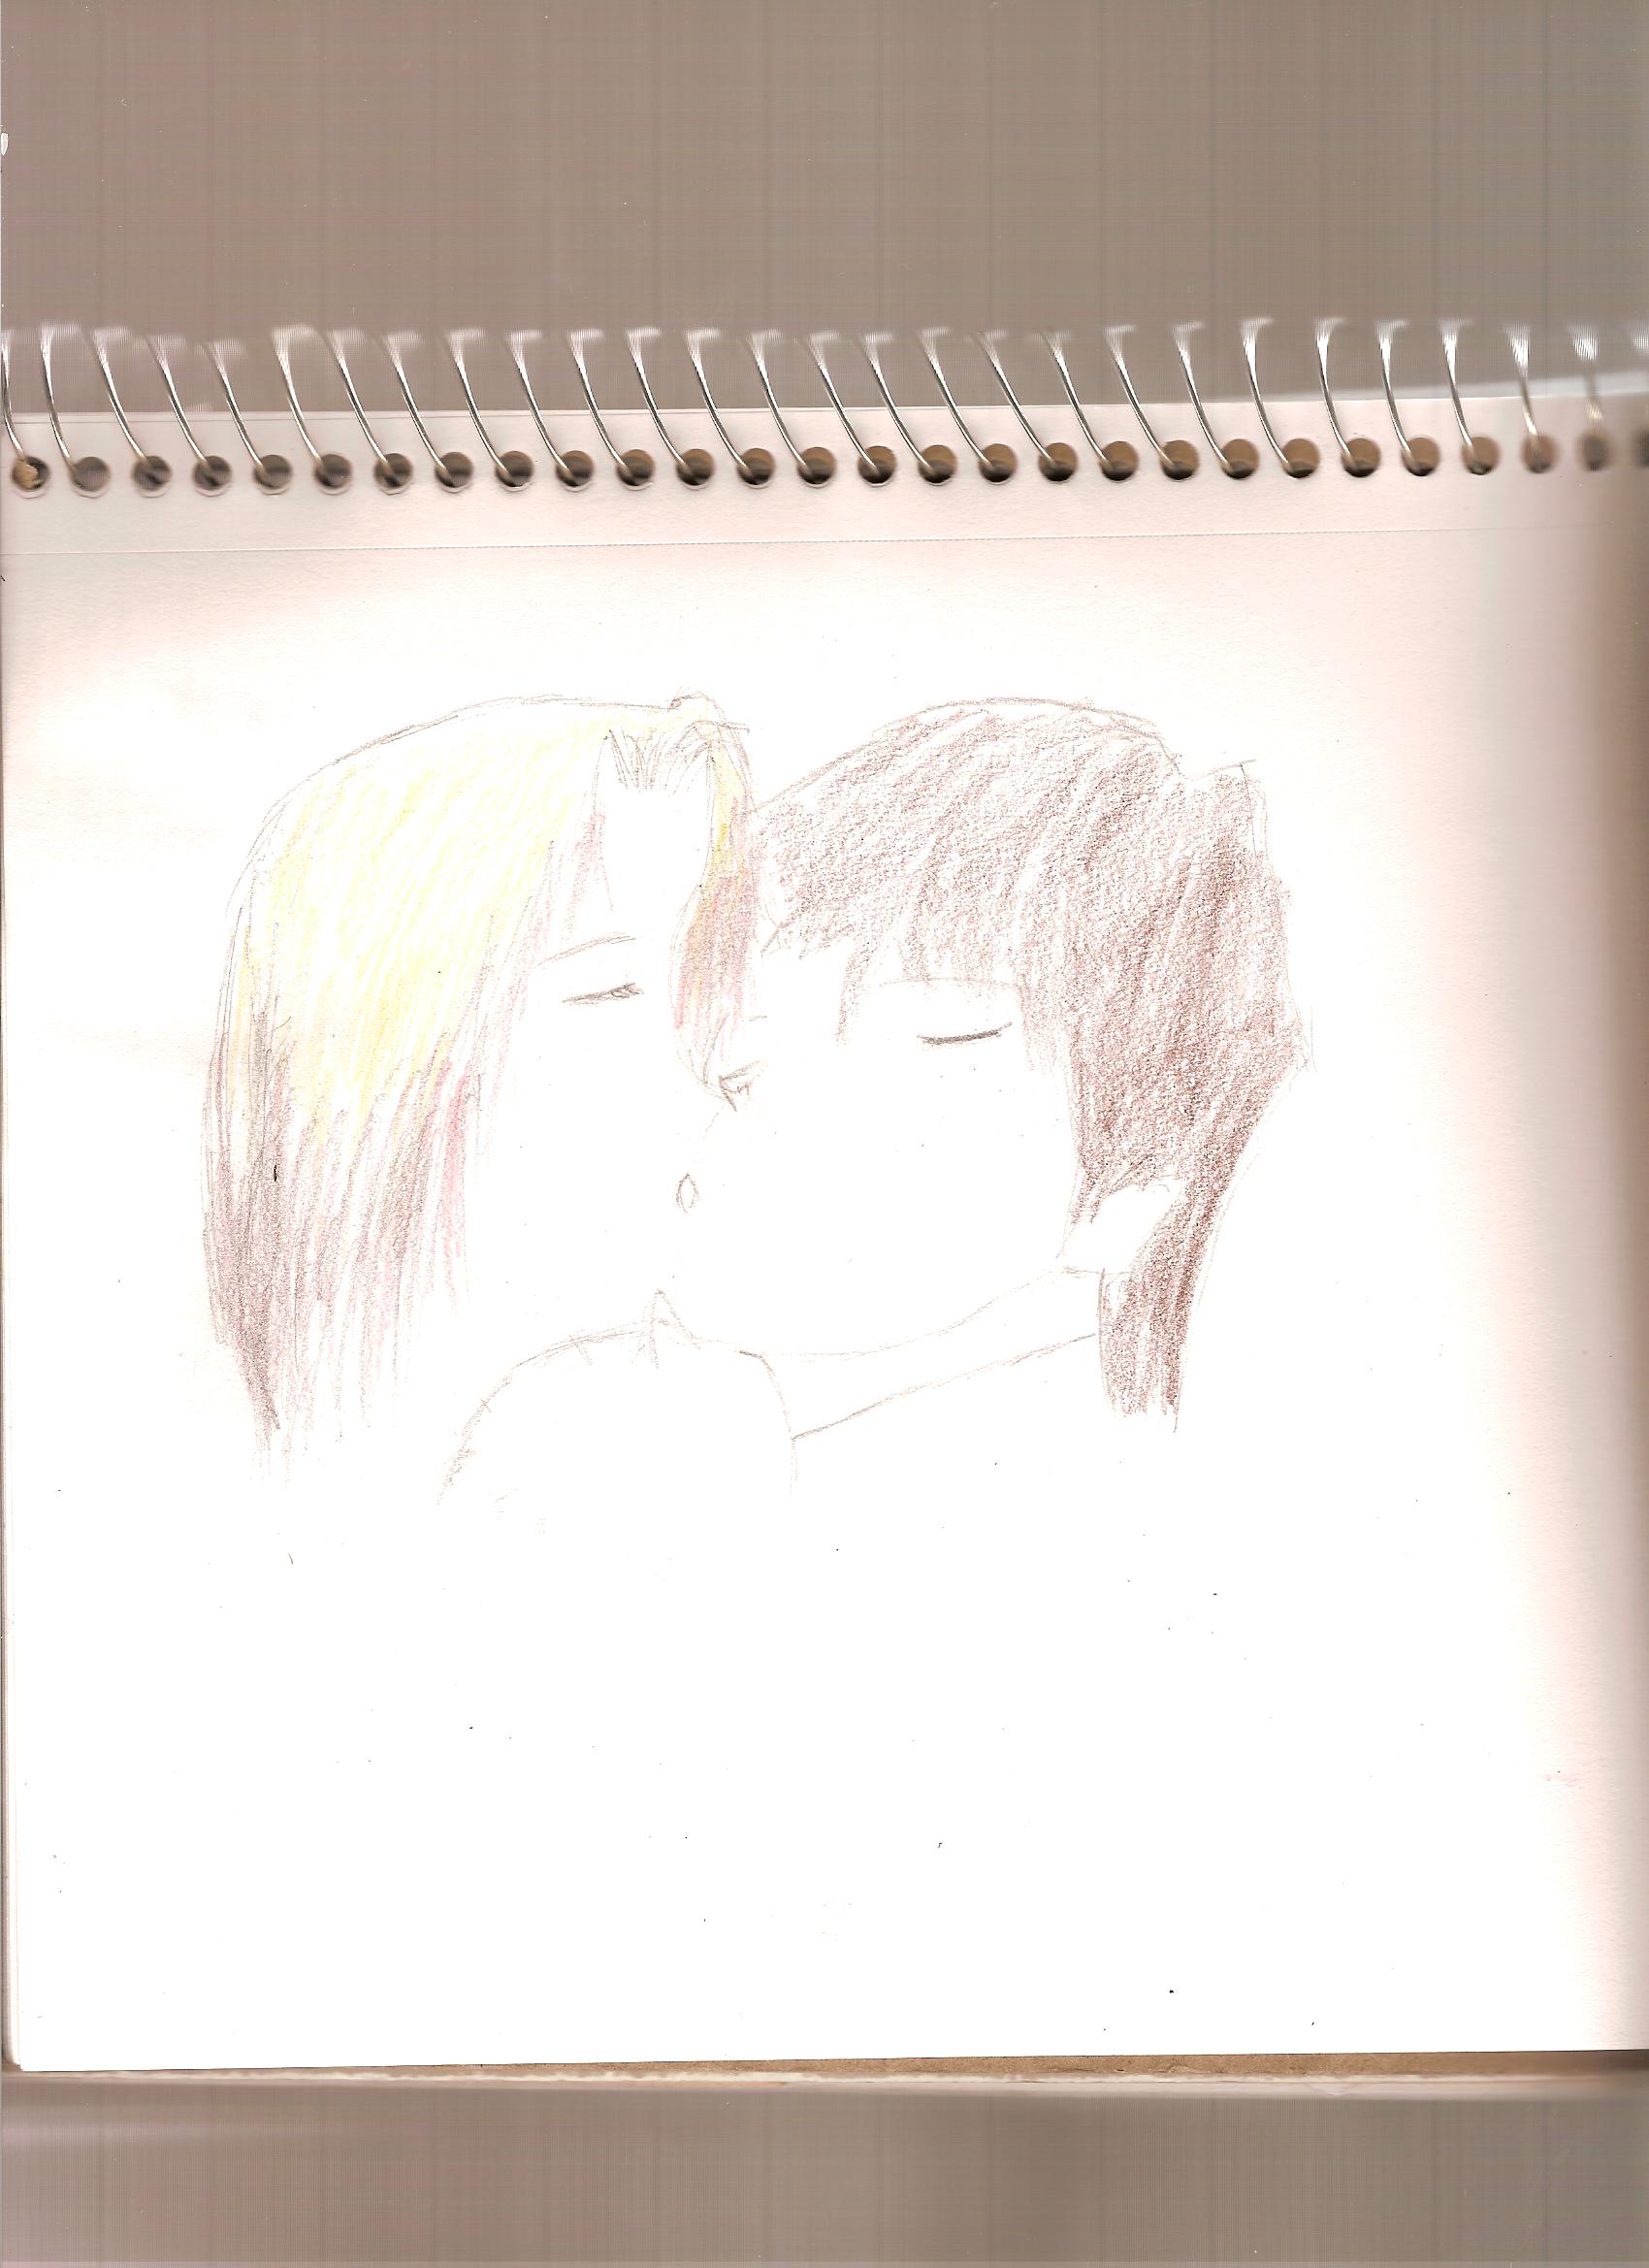 Kisses by Sailorra